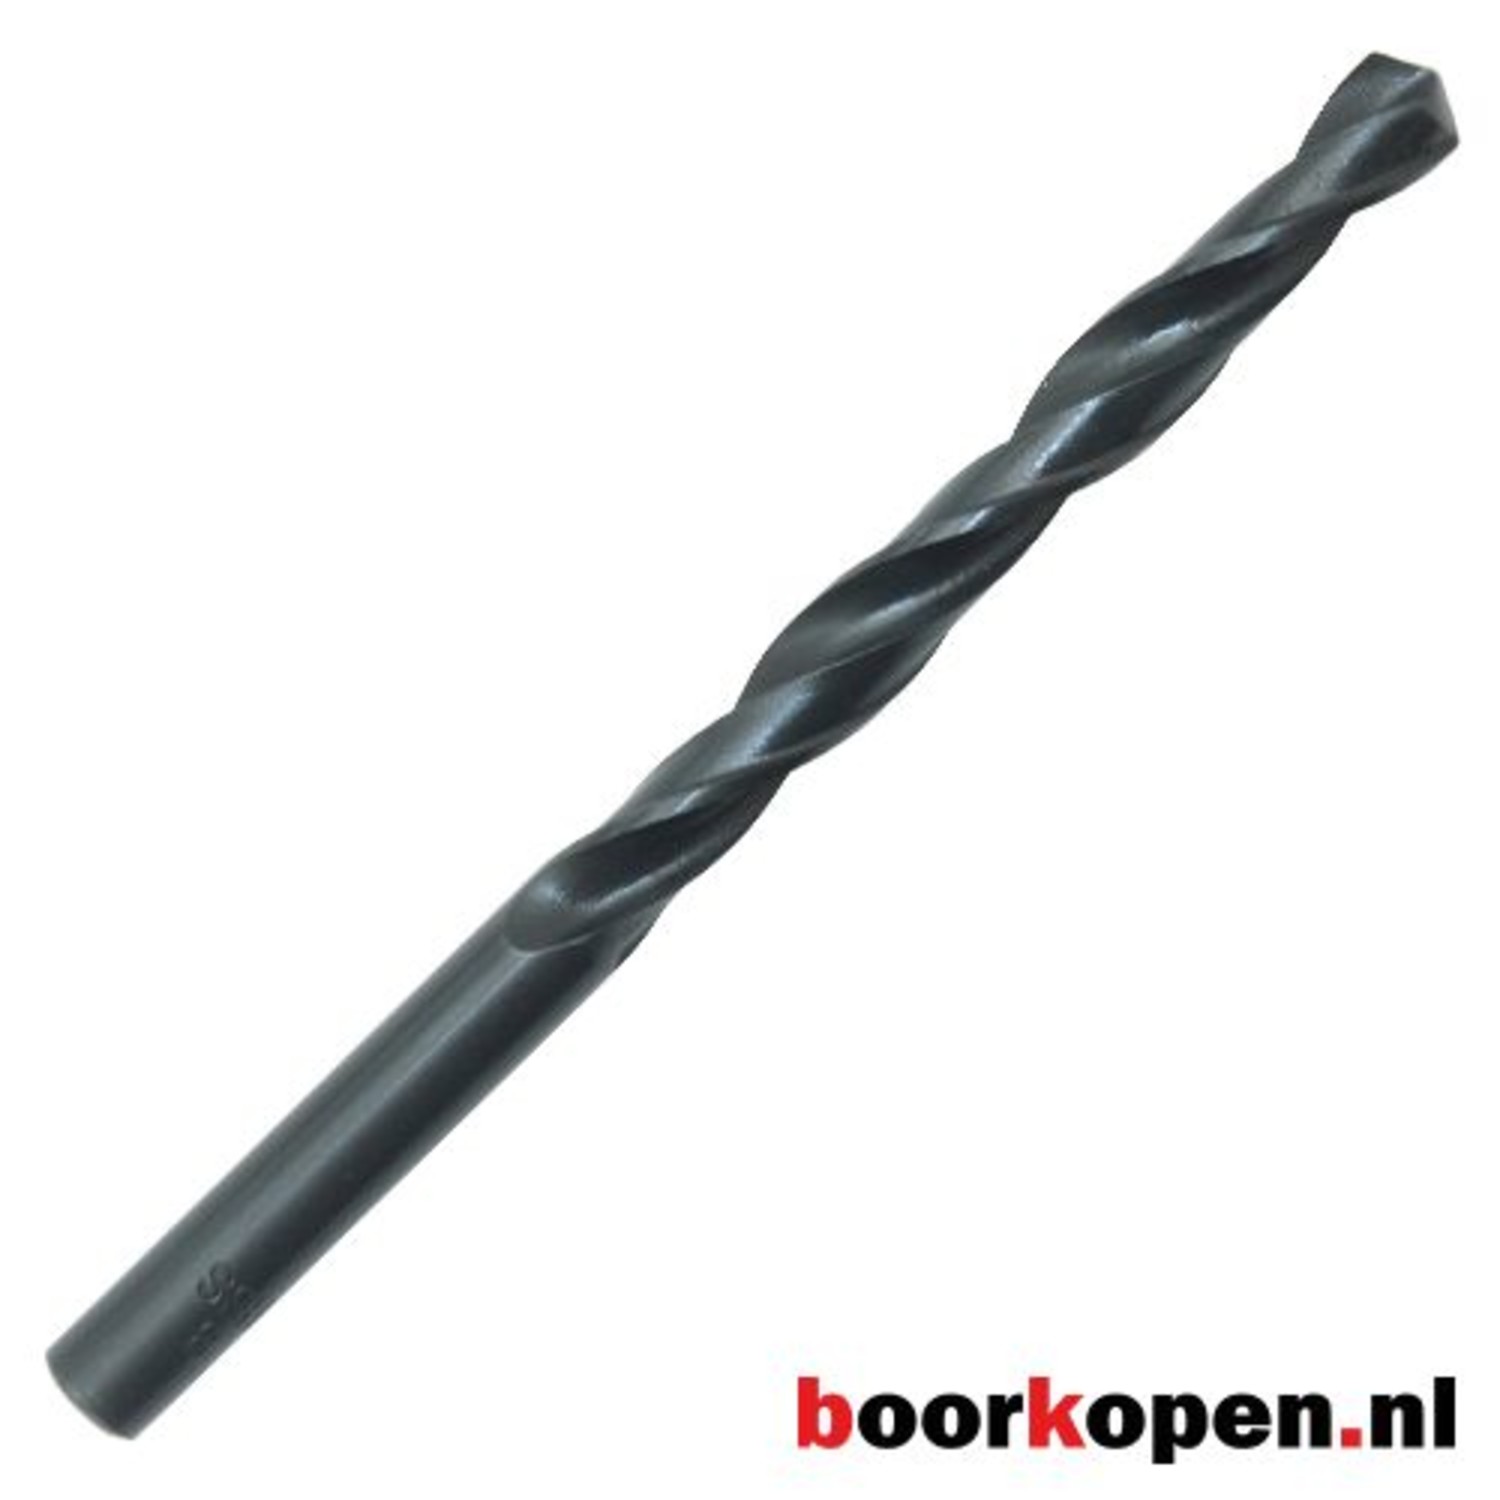 Metaalboor 3,3 mm rolgewalst | ons uit voorraad leverbaar! - Boorkopen.nl